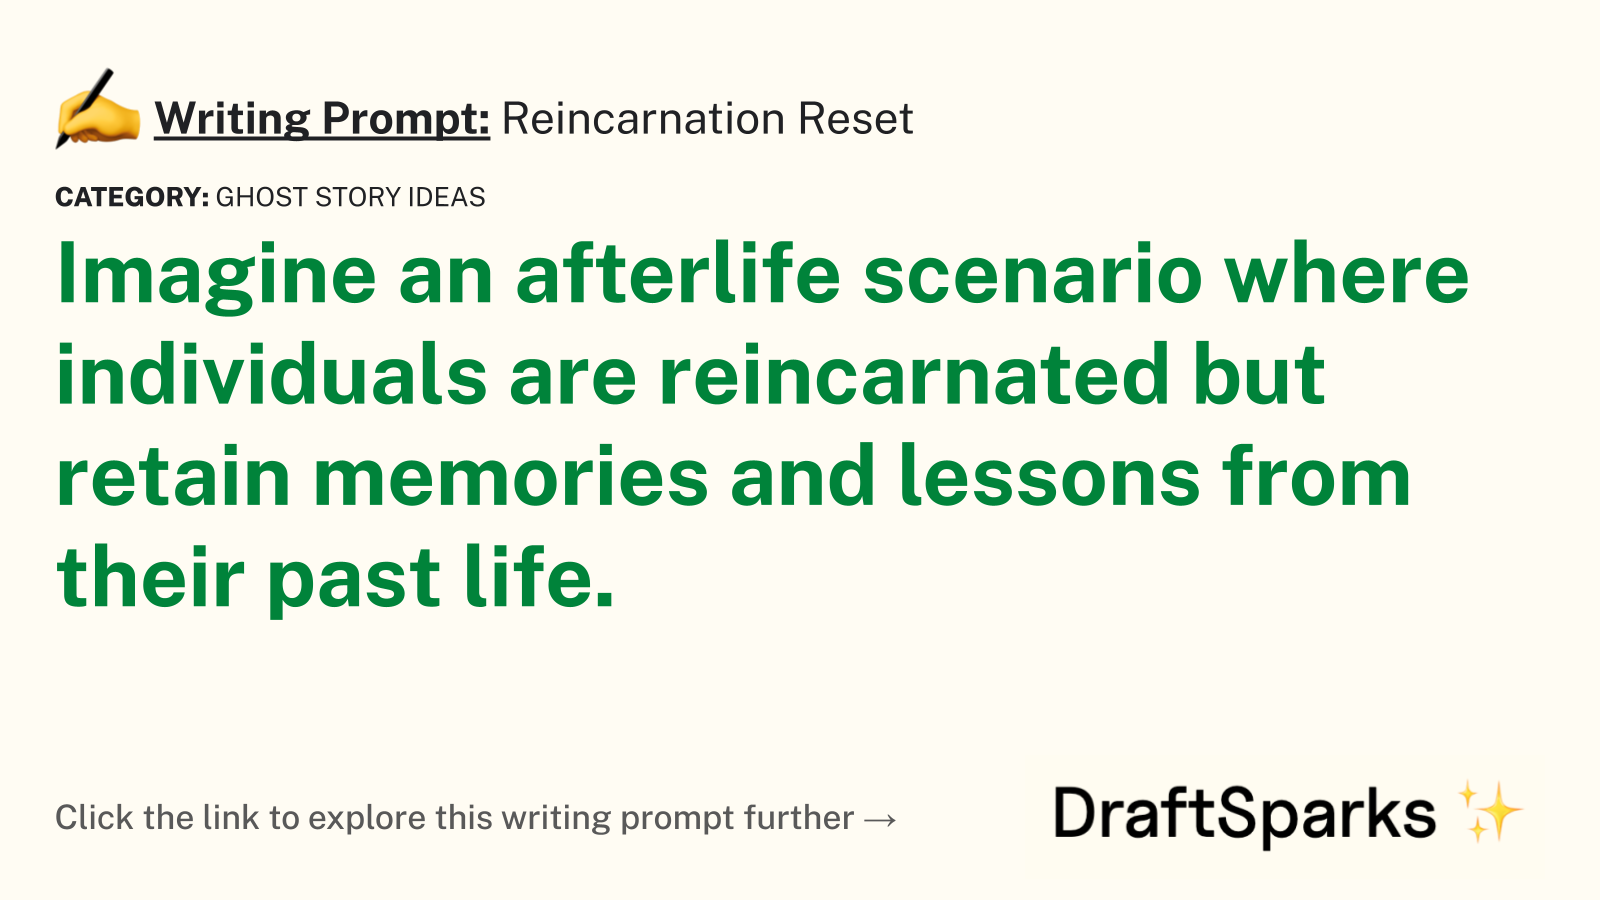 Reincarnation Reset